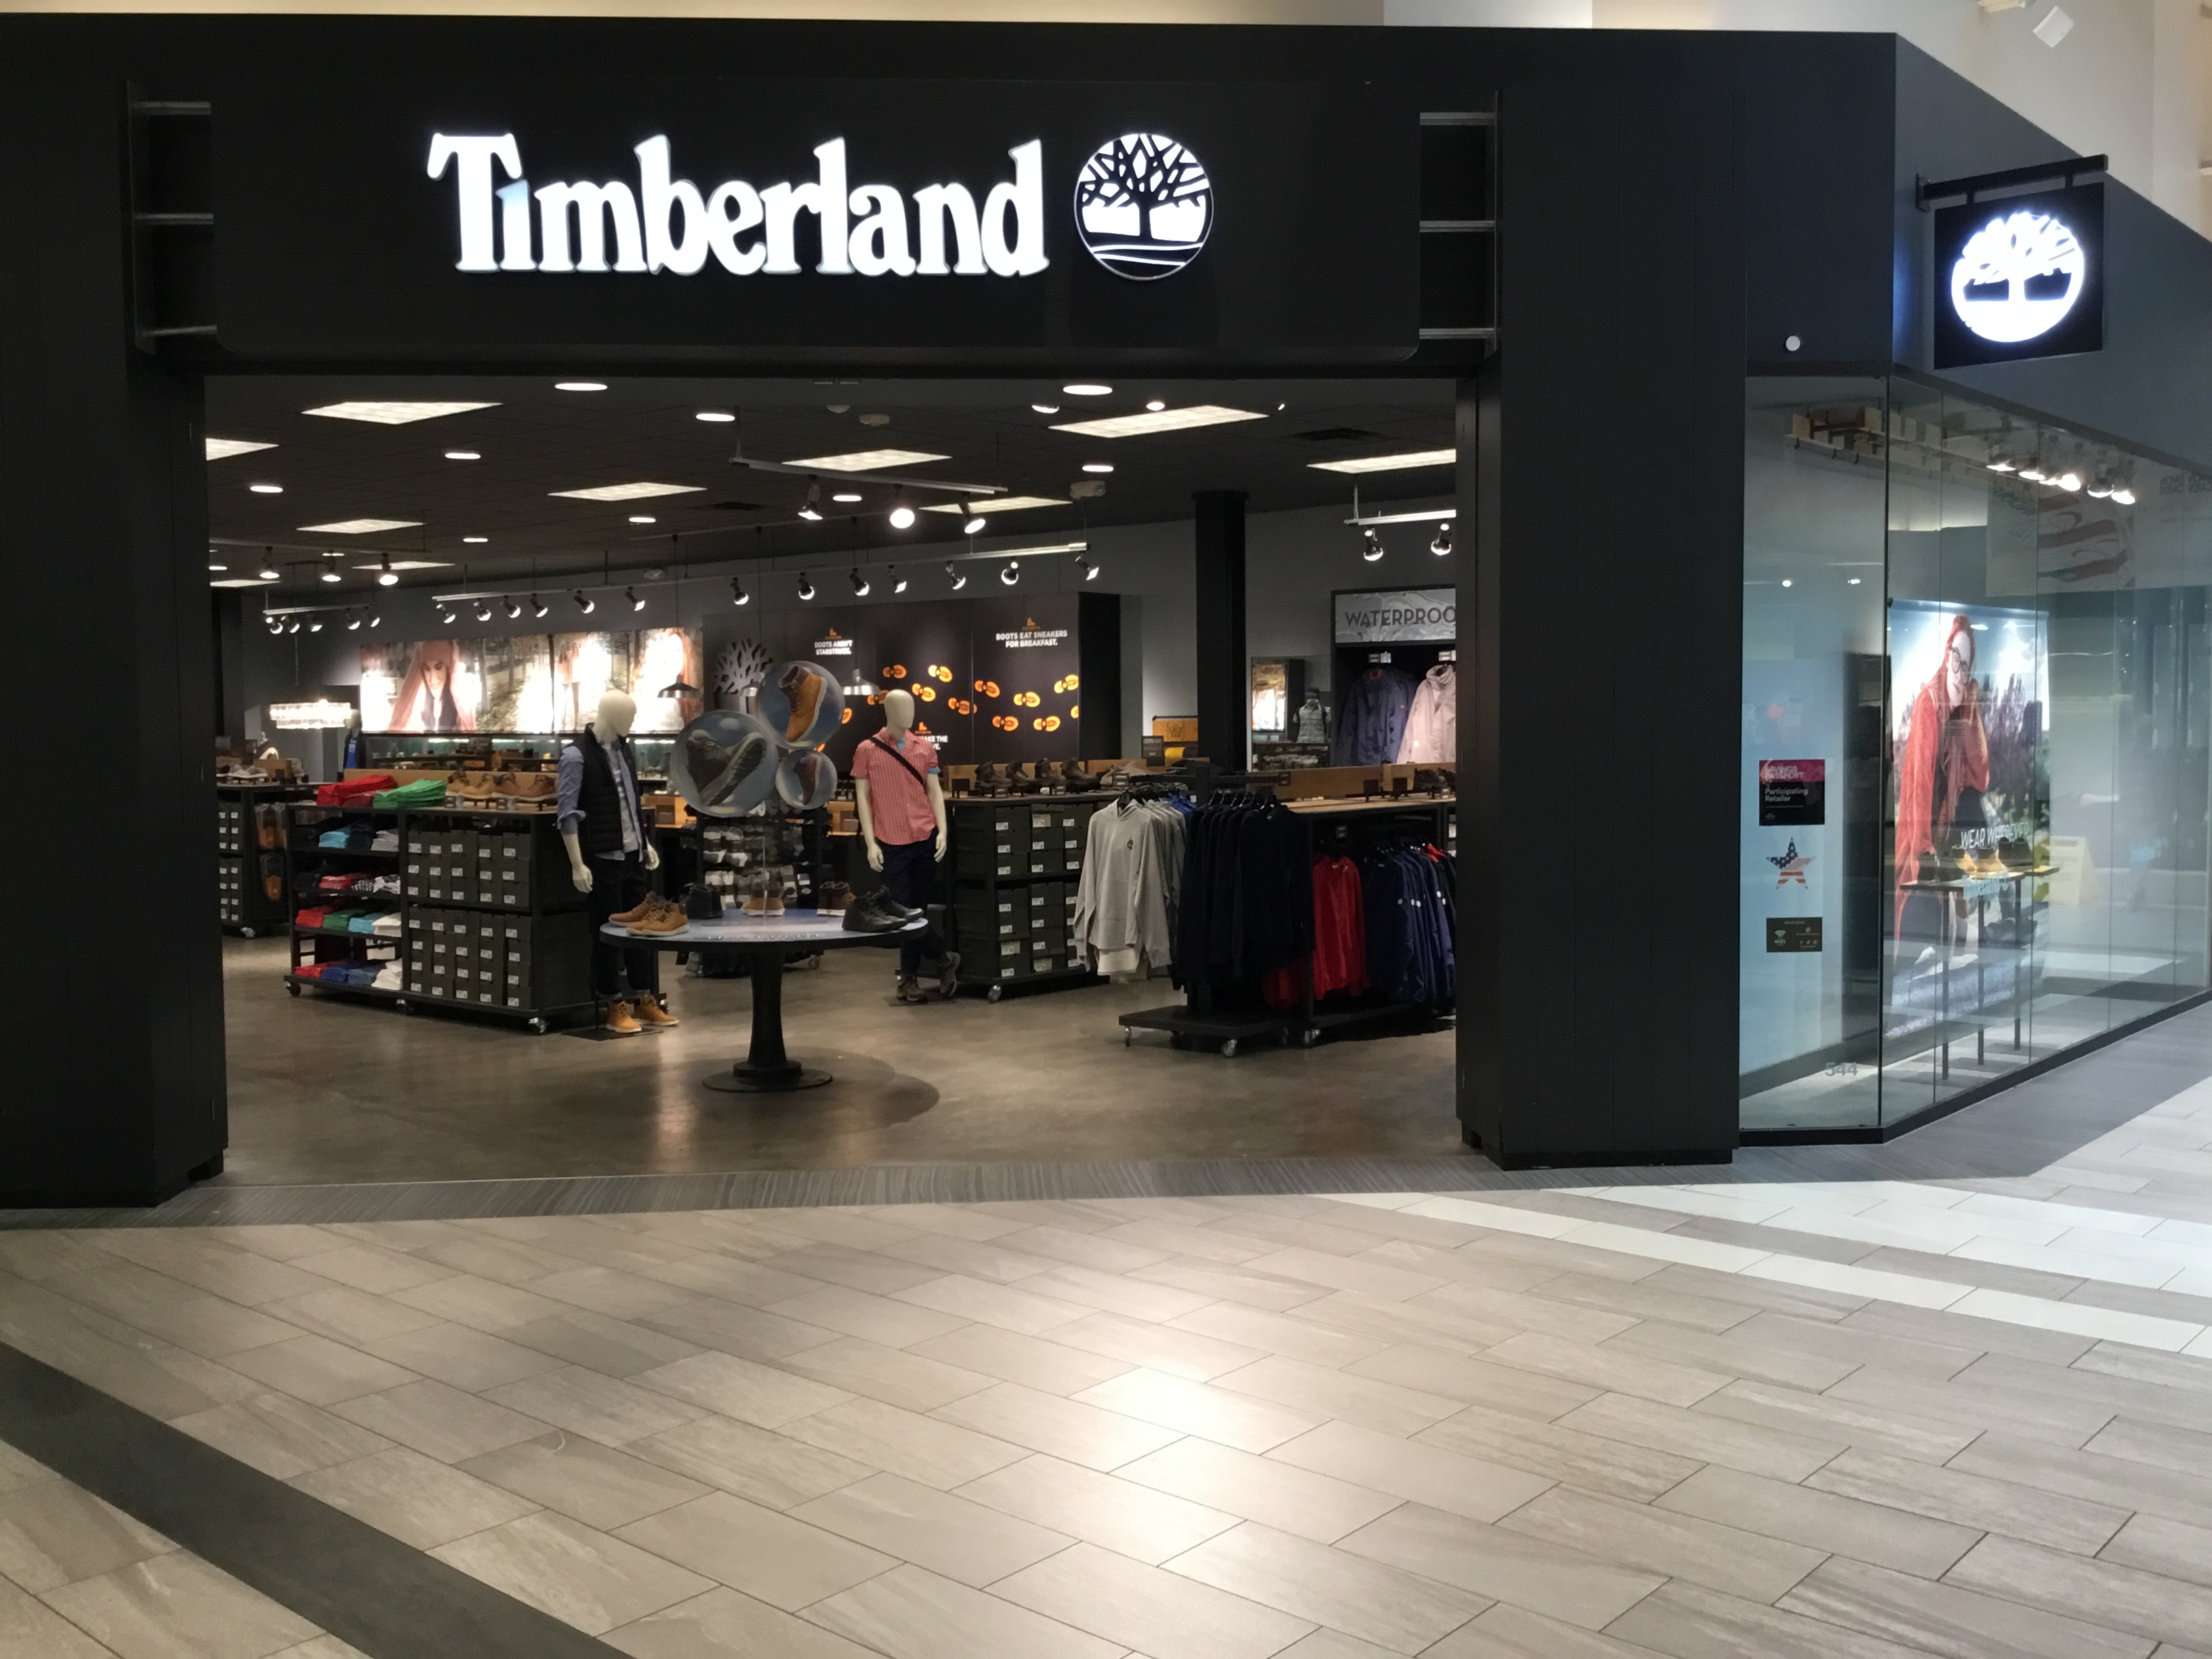 Timberland - Boots, Clothing & Milpitas,